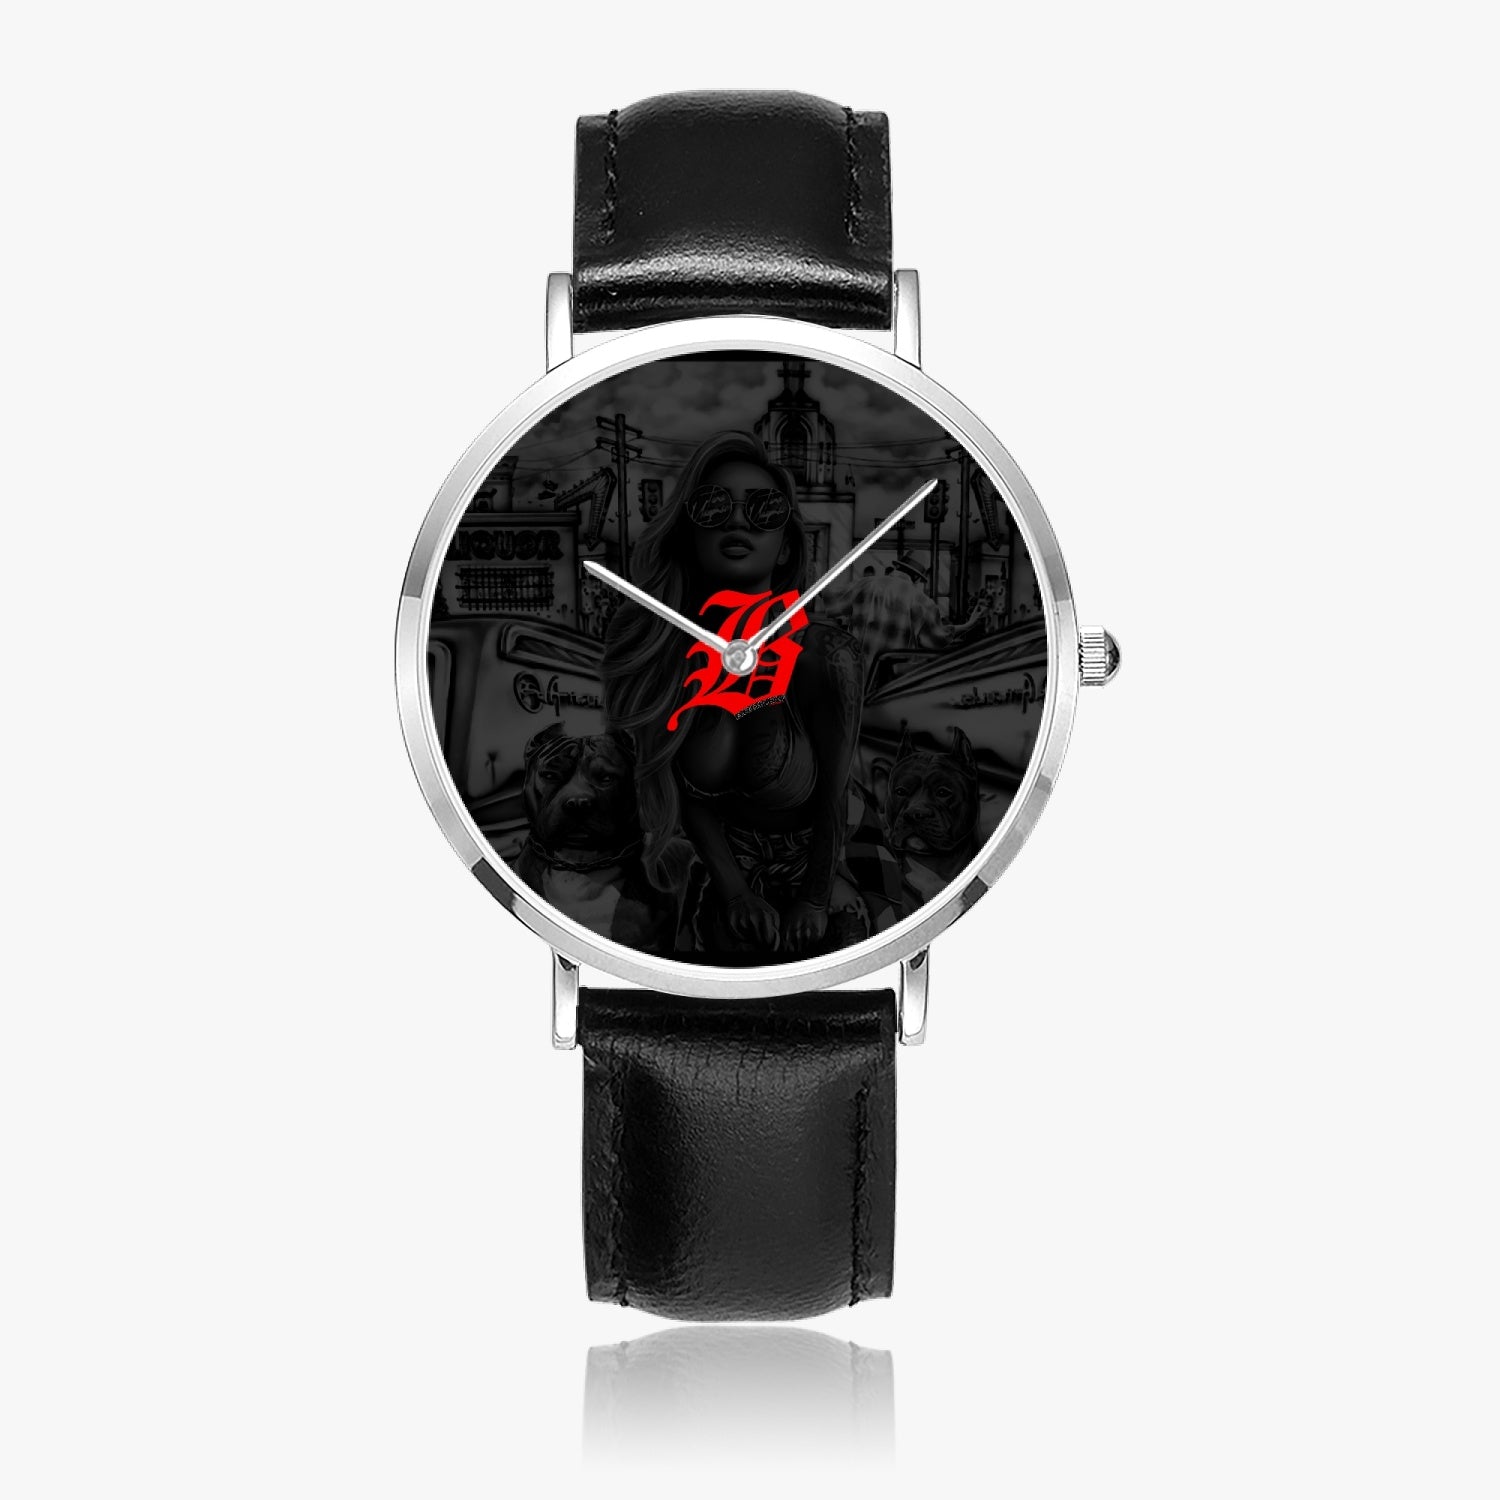 162. Hot Selling Ultra-Thin Leather Strap Quartz Watch (Silver) - GHETTO LOVE